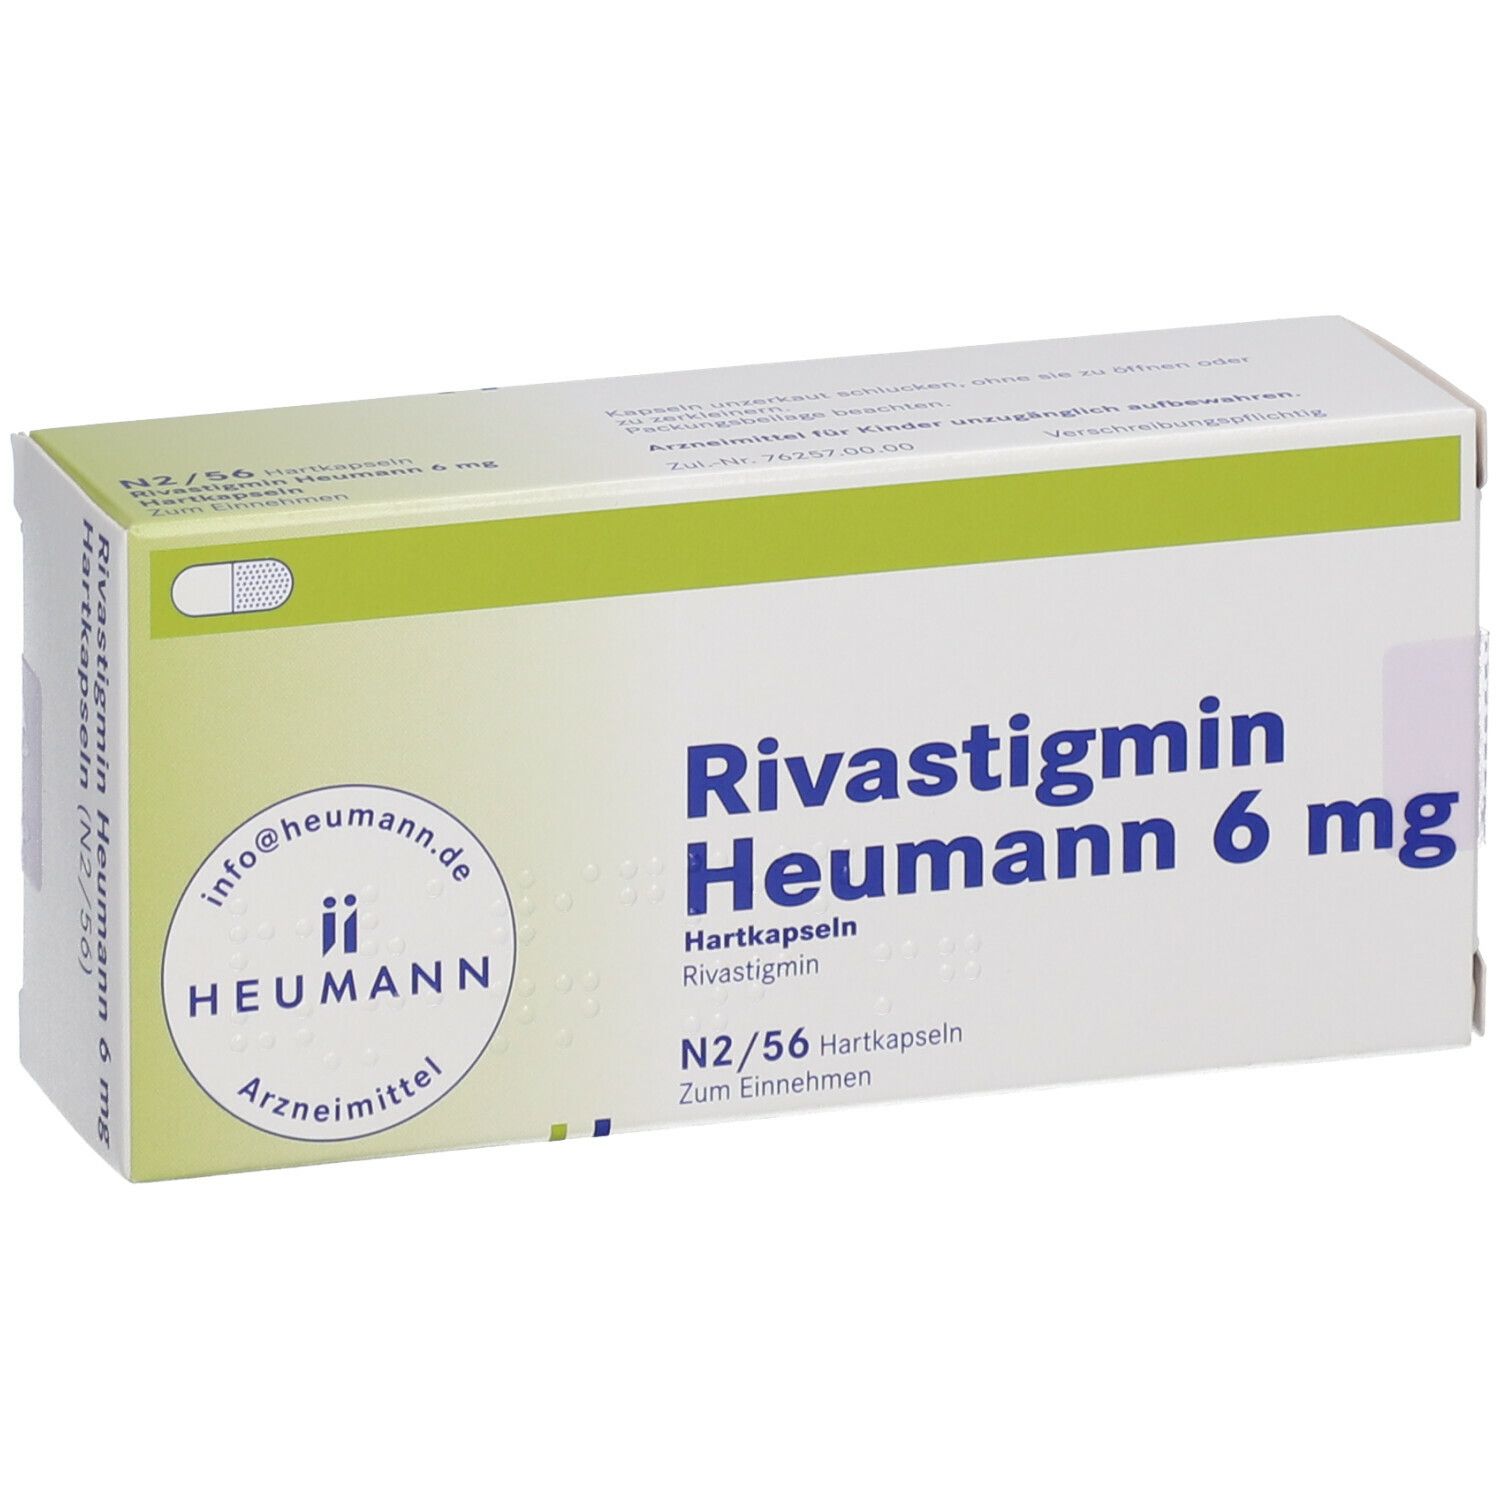 Rivastigmin Heumann 6 mg